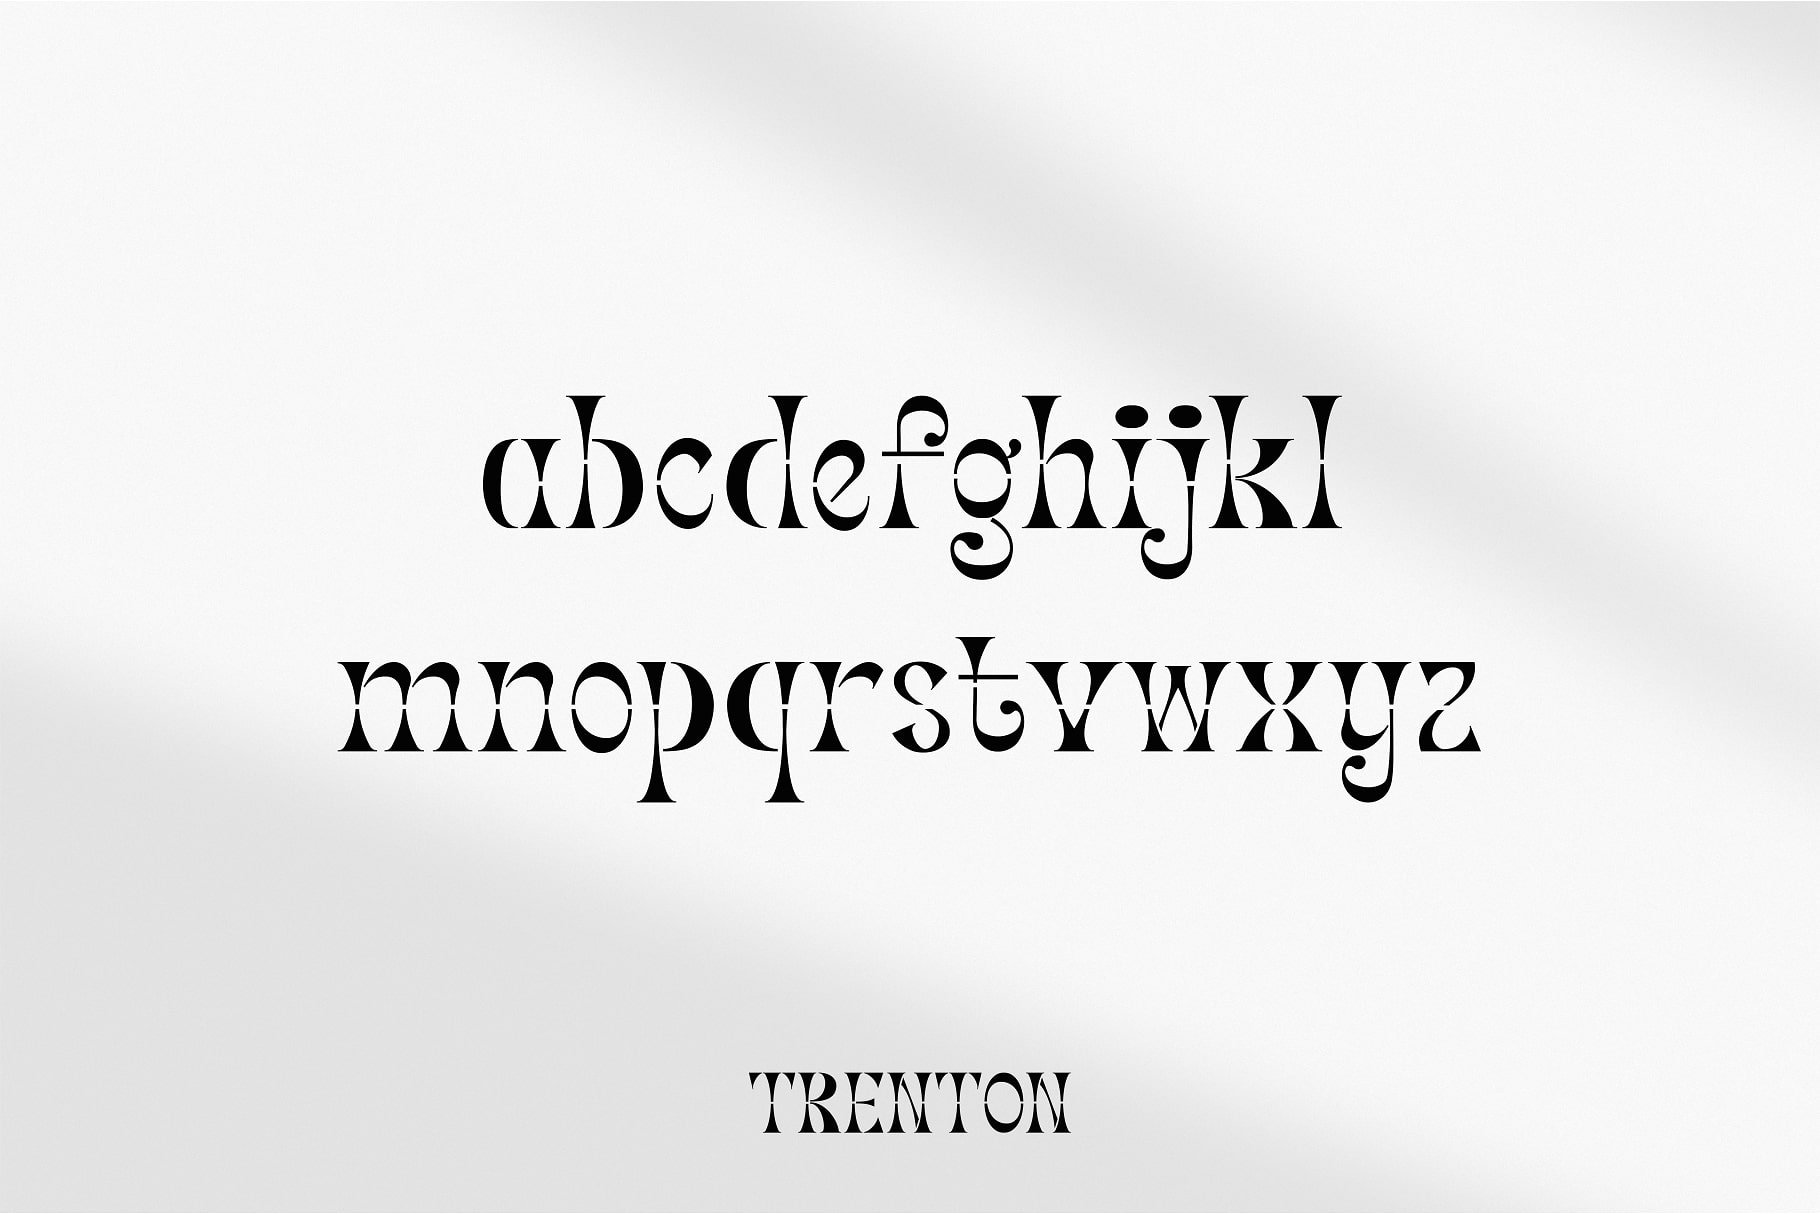 Trenton - Stencil Display preview image.